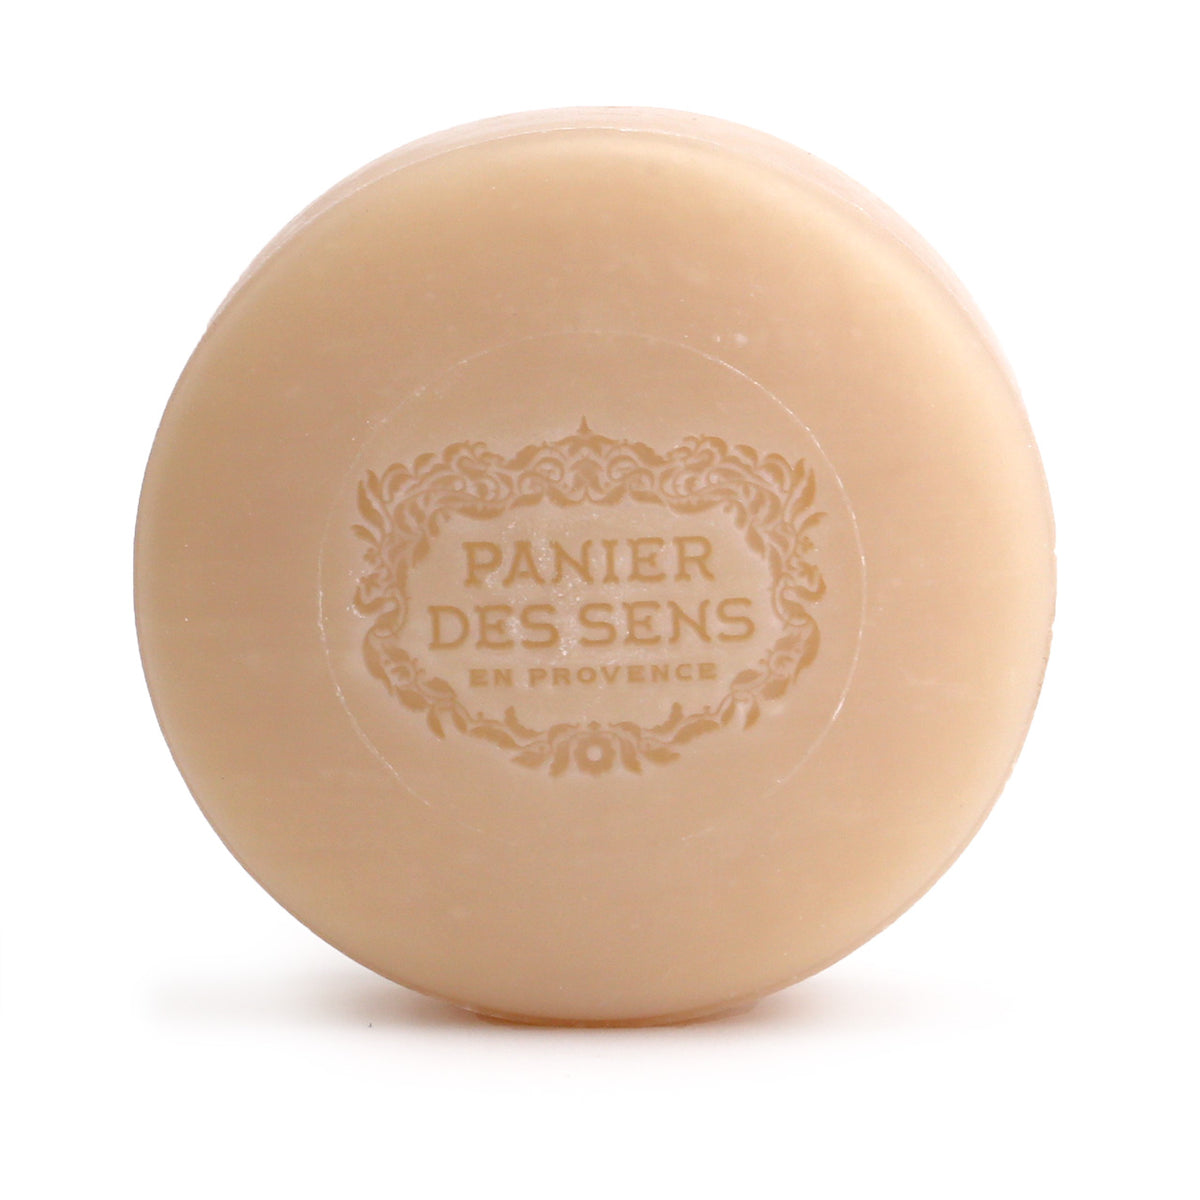 Panier des Sens Shave Soap puck looking at the top logo impression